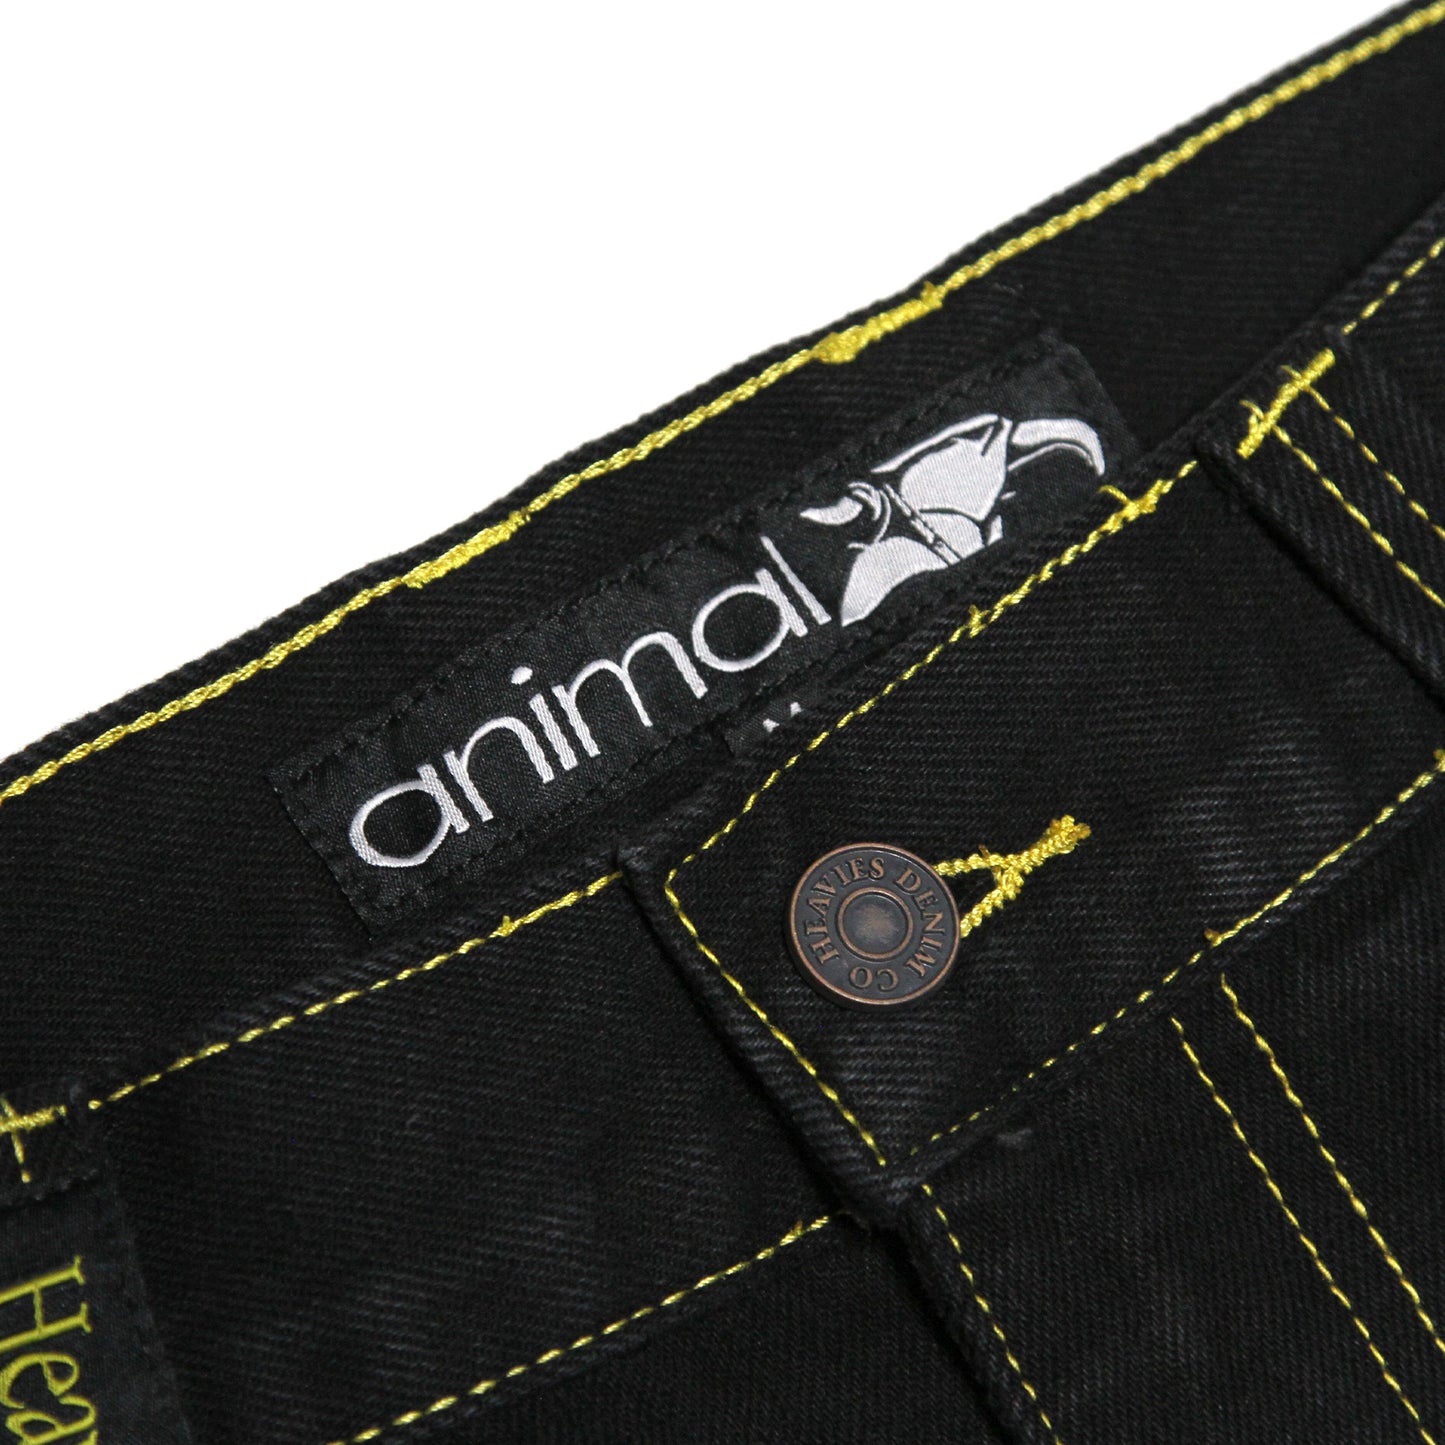 ANIMAL X HEAVIES - Classic Jeans/Black